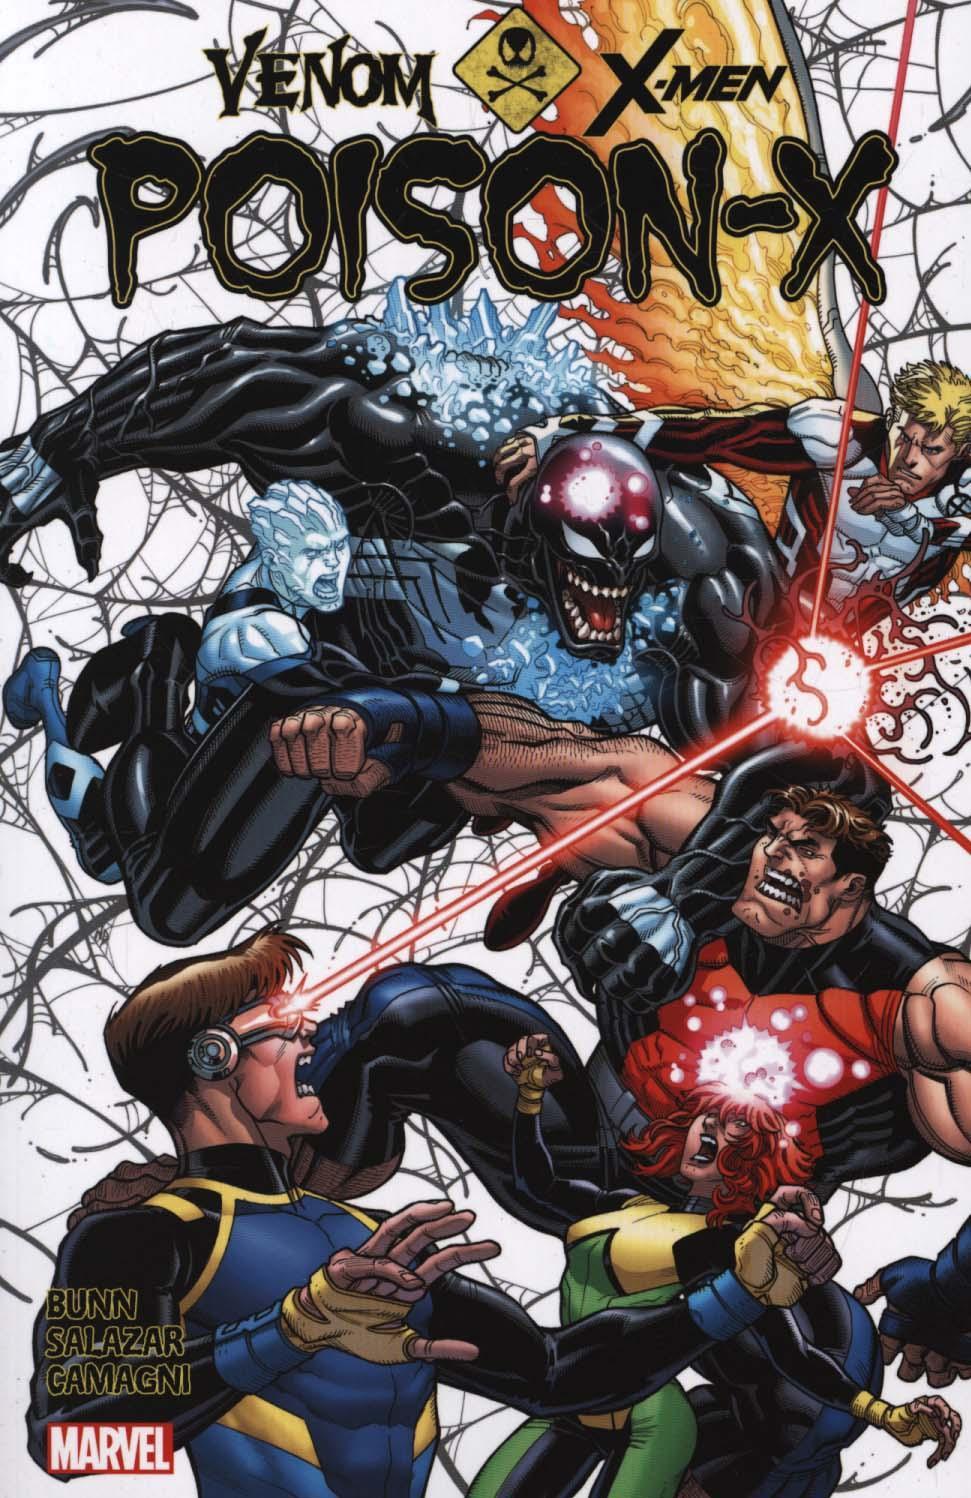 Venom & X-men: Poison-x